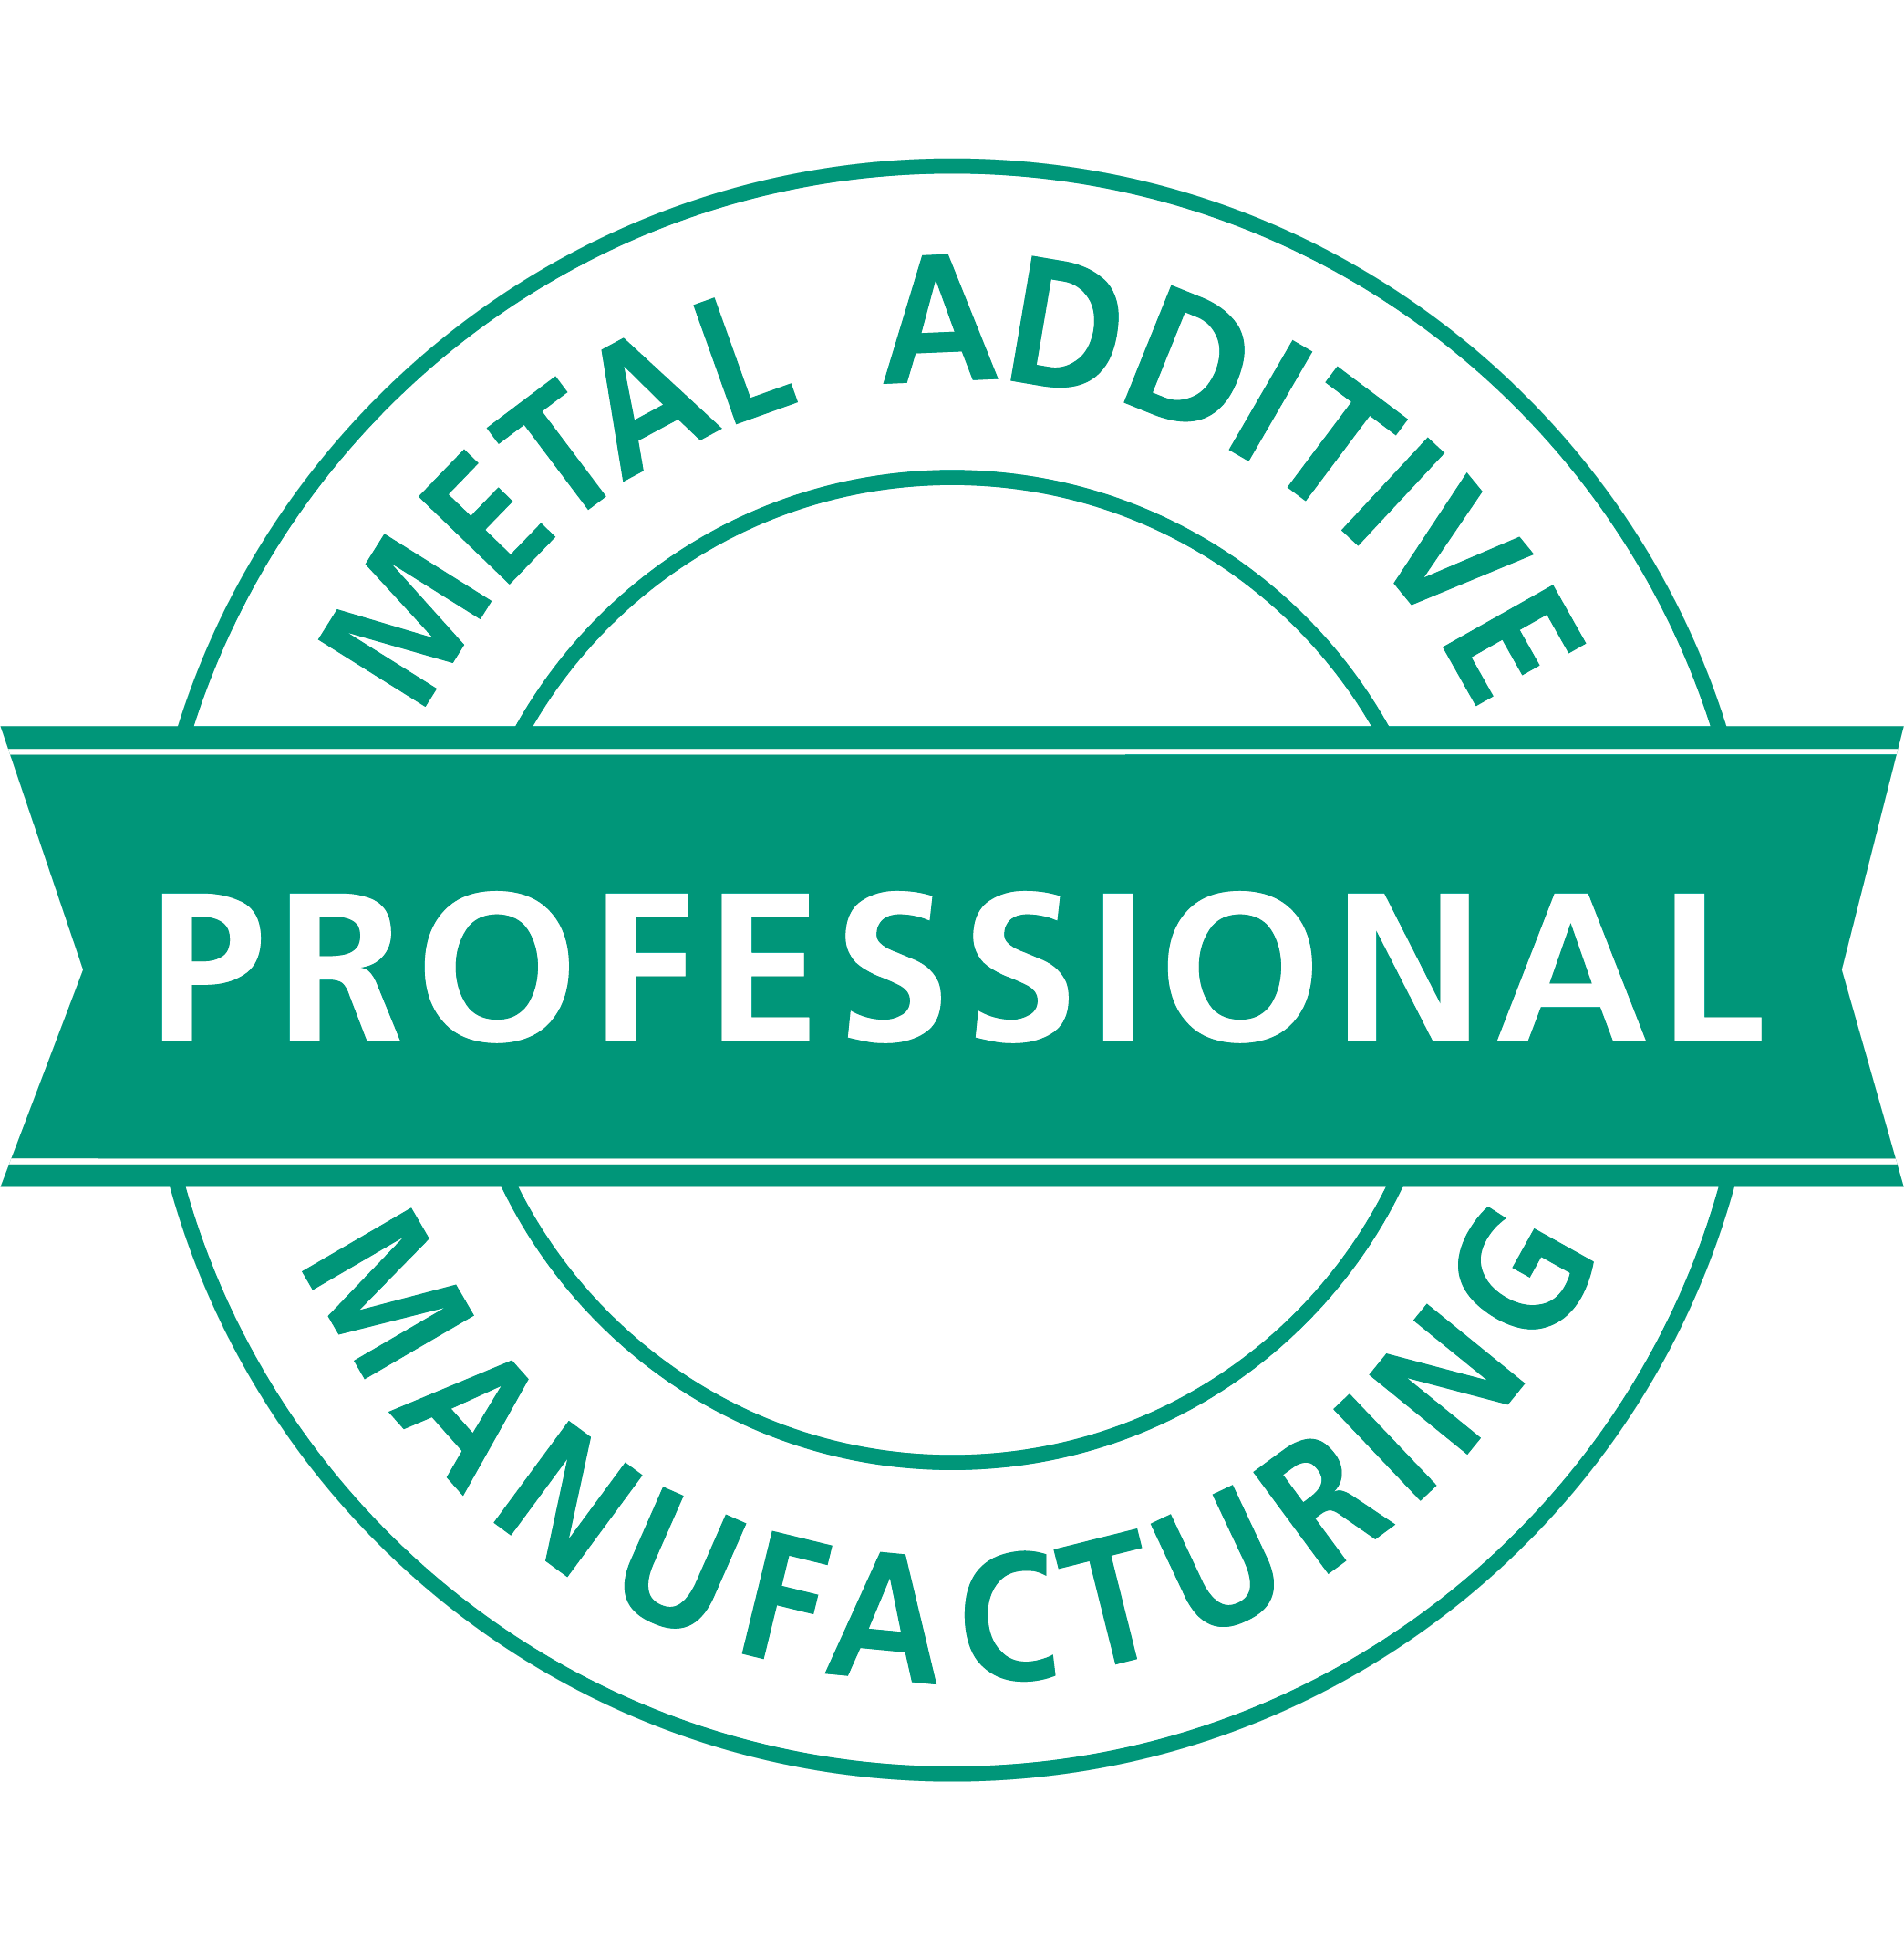 Certificate Metal Additive Professional